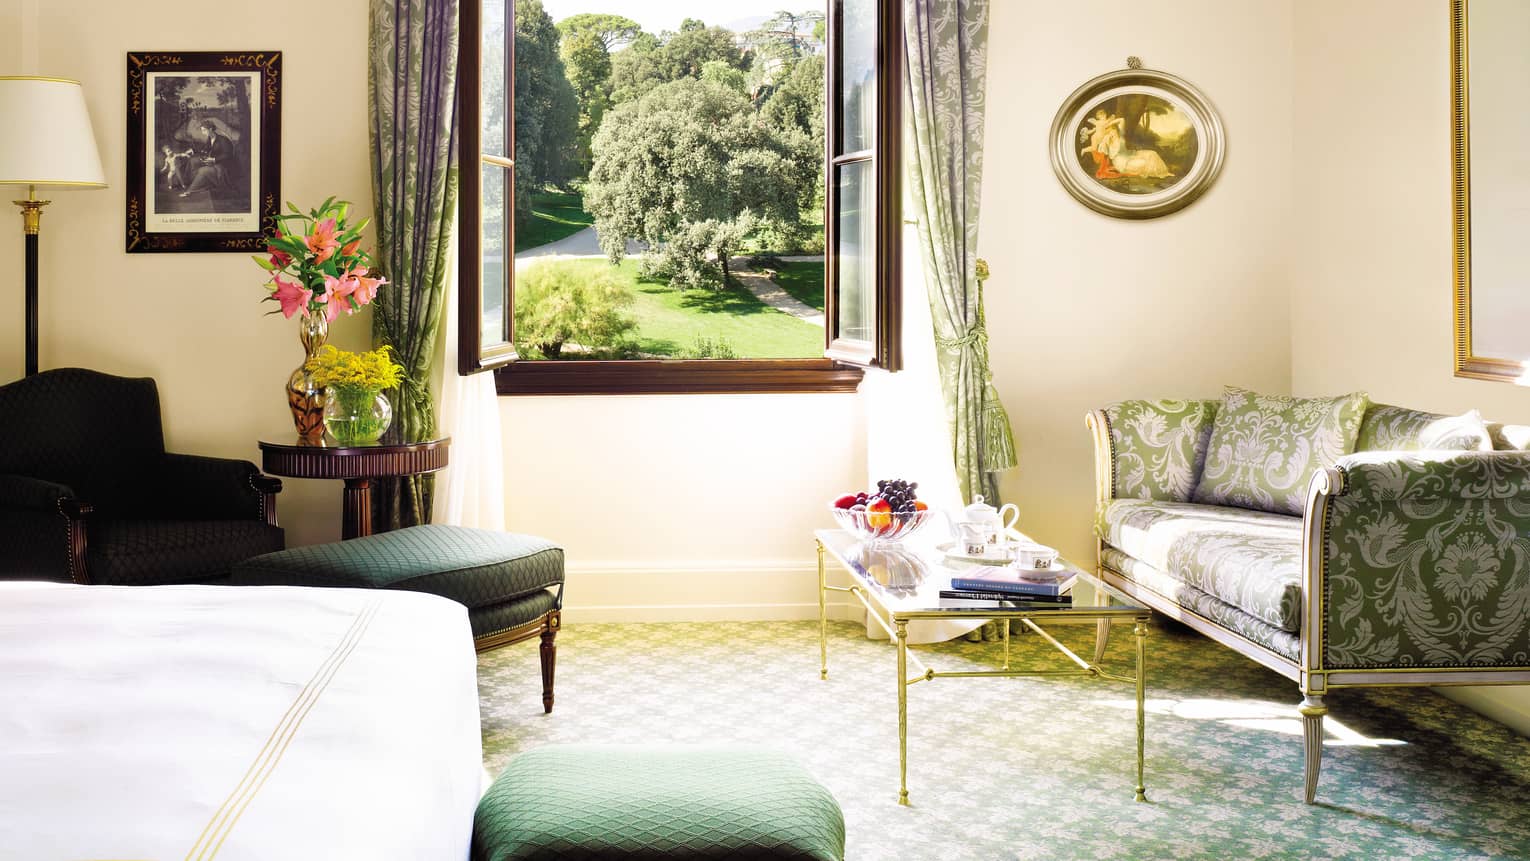 Four Seasons Room silk sofa, armchair, table under large open window overlooking gardens